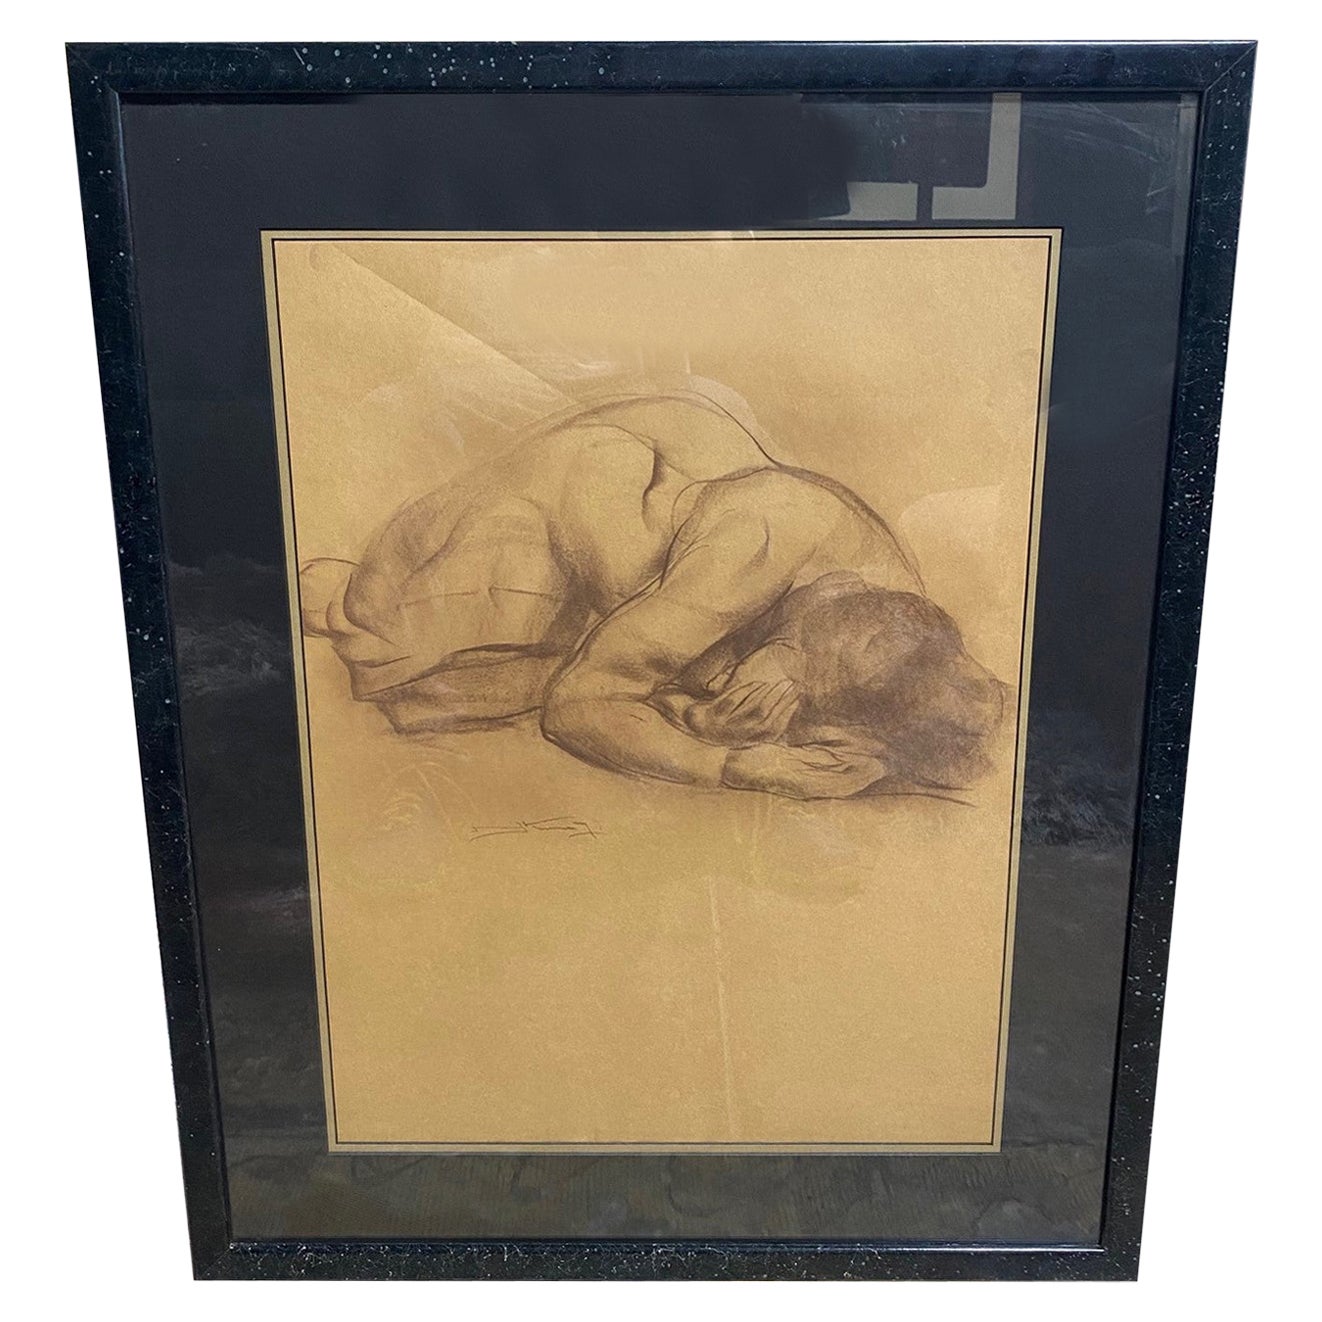 Emil Kosa Jr. Signed Framed Original Figurative Nude Charcoal Drawing on Paper